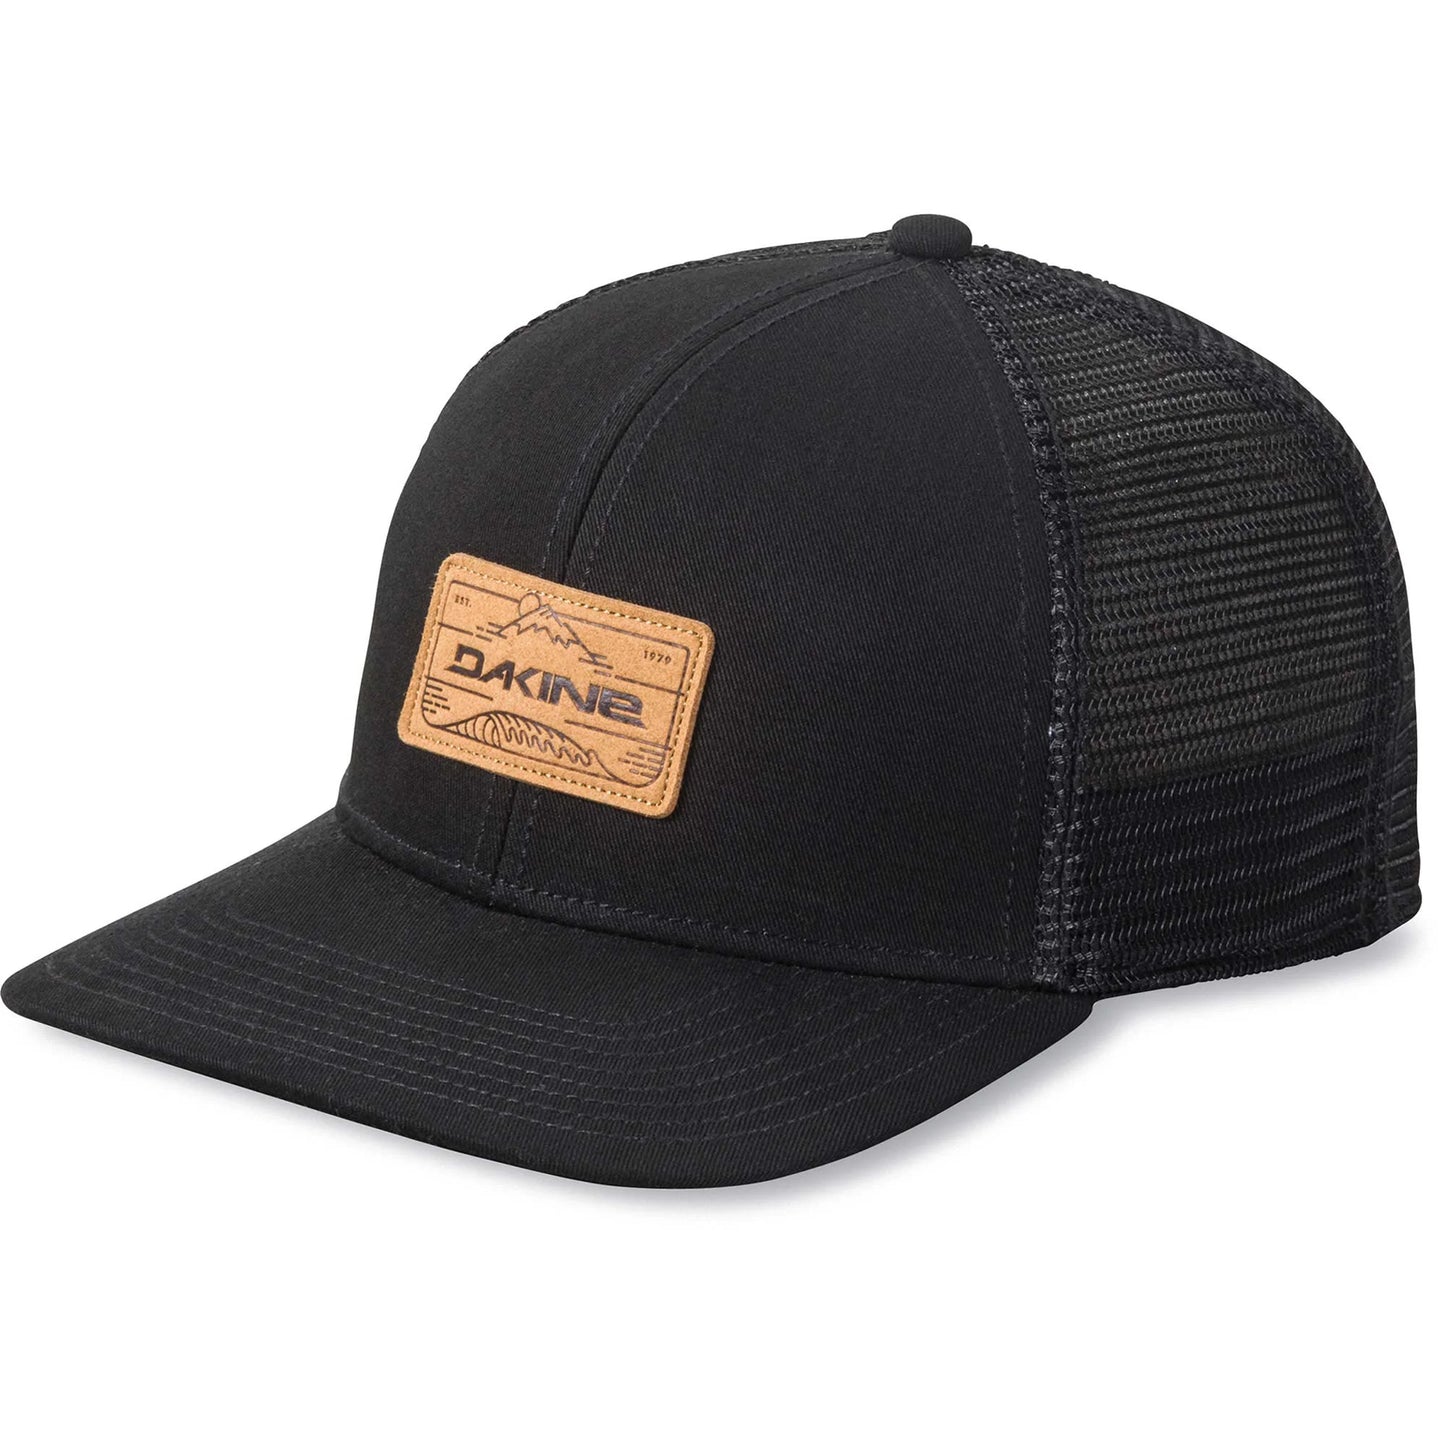 Dakine Peak To Peak Trucker Hat - Black